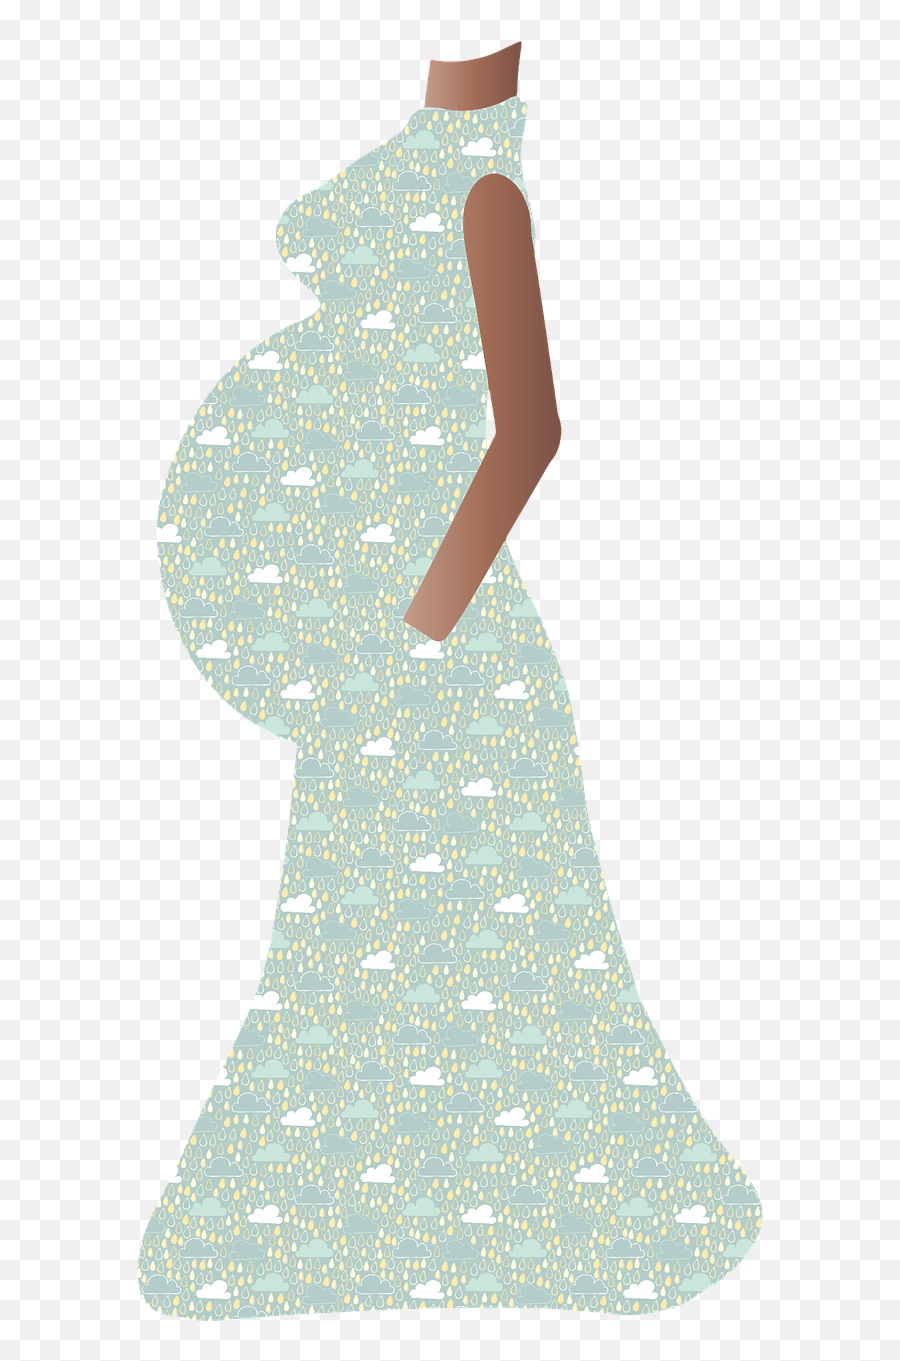 Pregnant Lady Silhouette Ethnic - Free Vector Graphic On Pixabay Desenho De Negra Gravida Png,Black Woman Silhouette Png